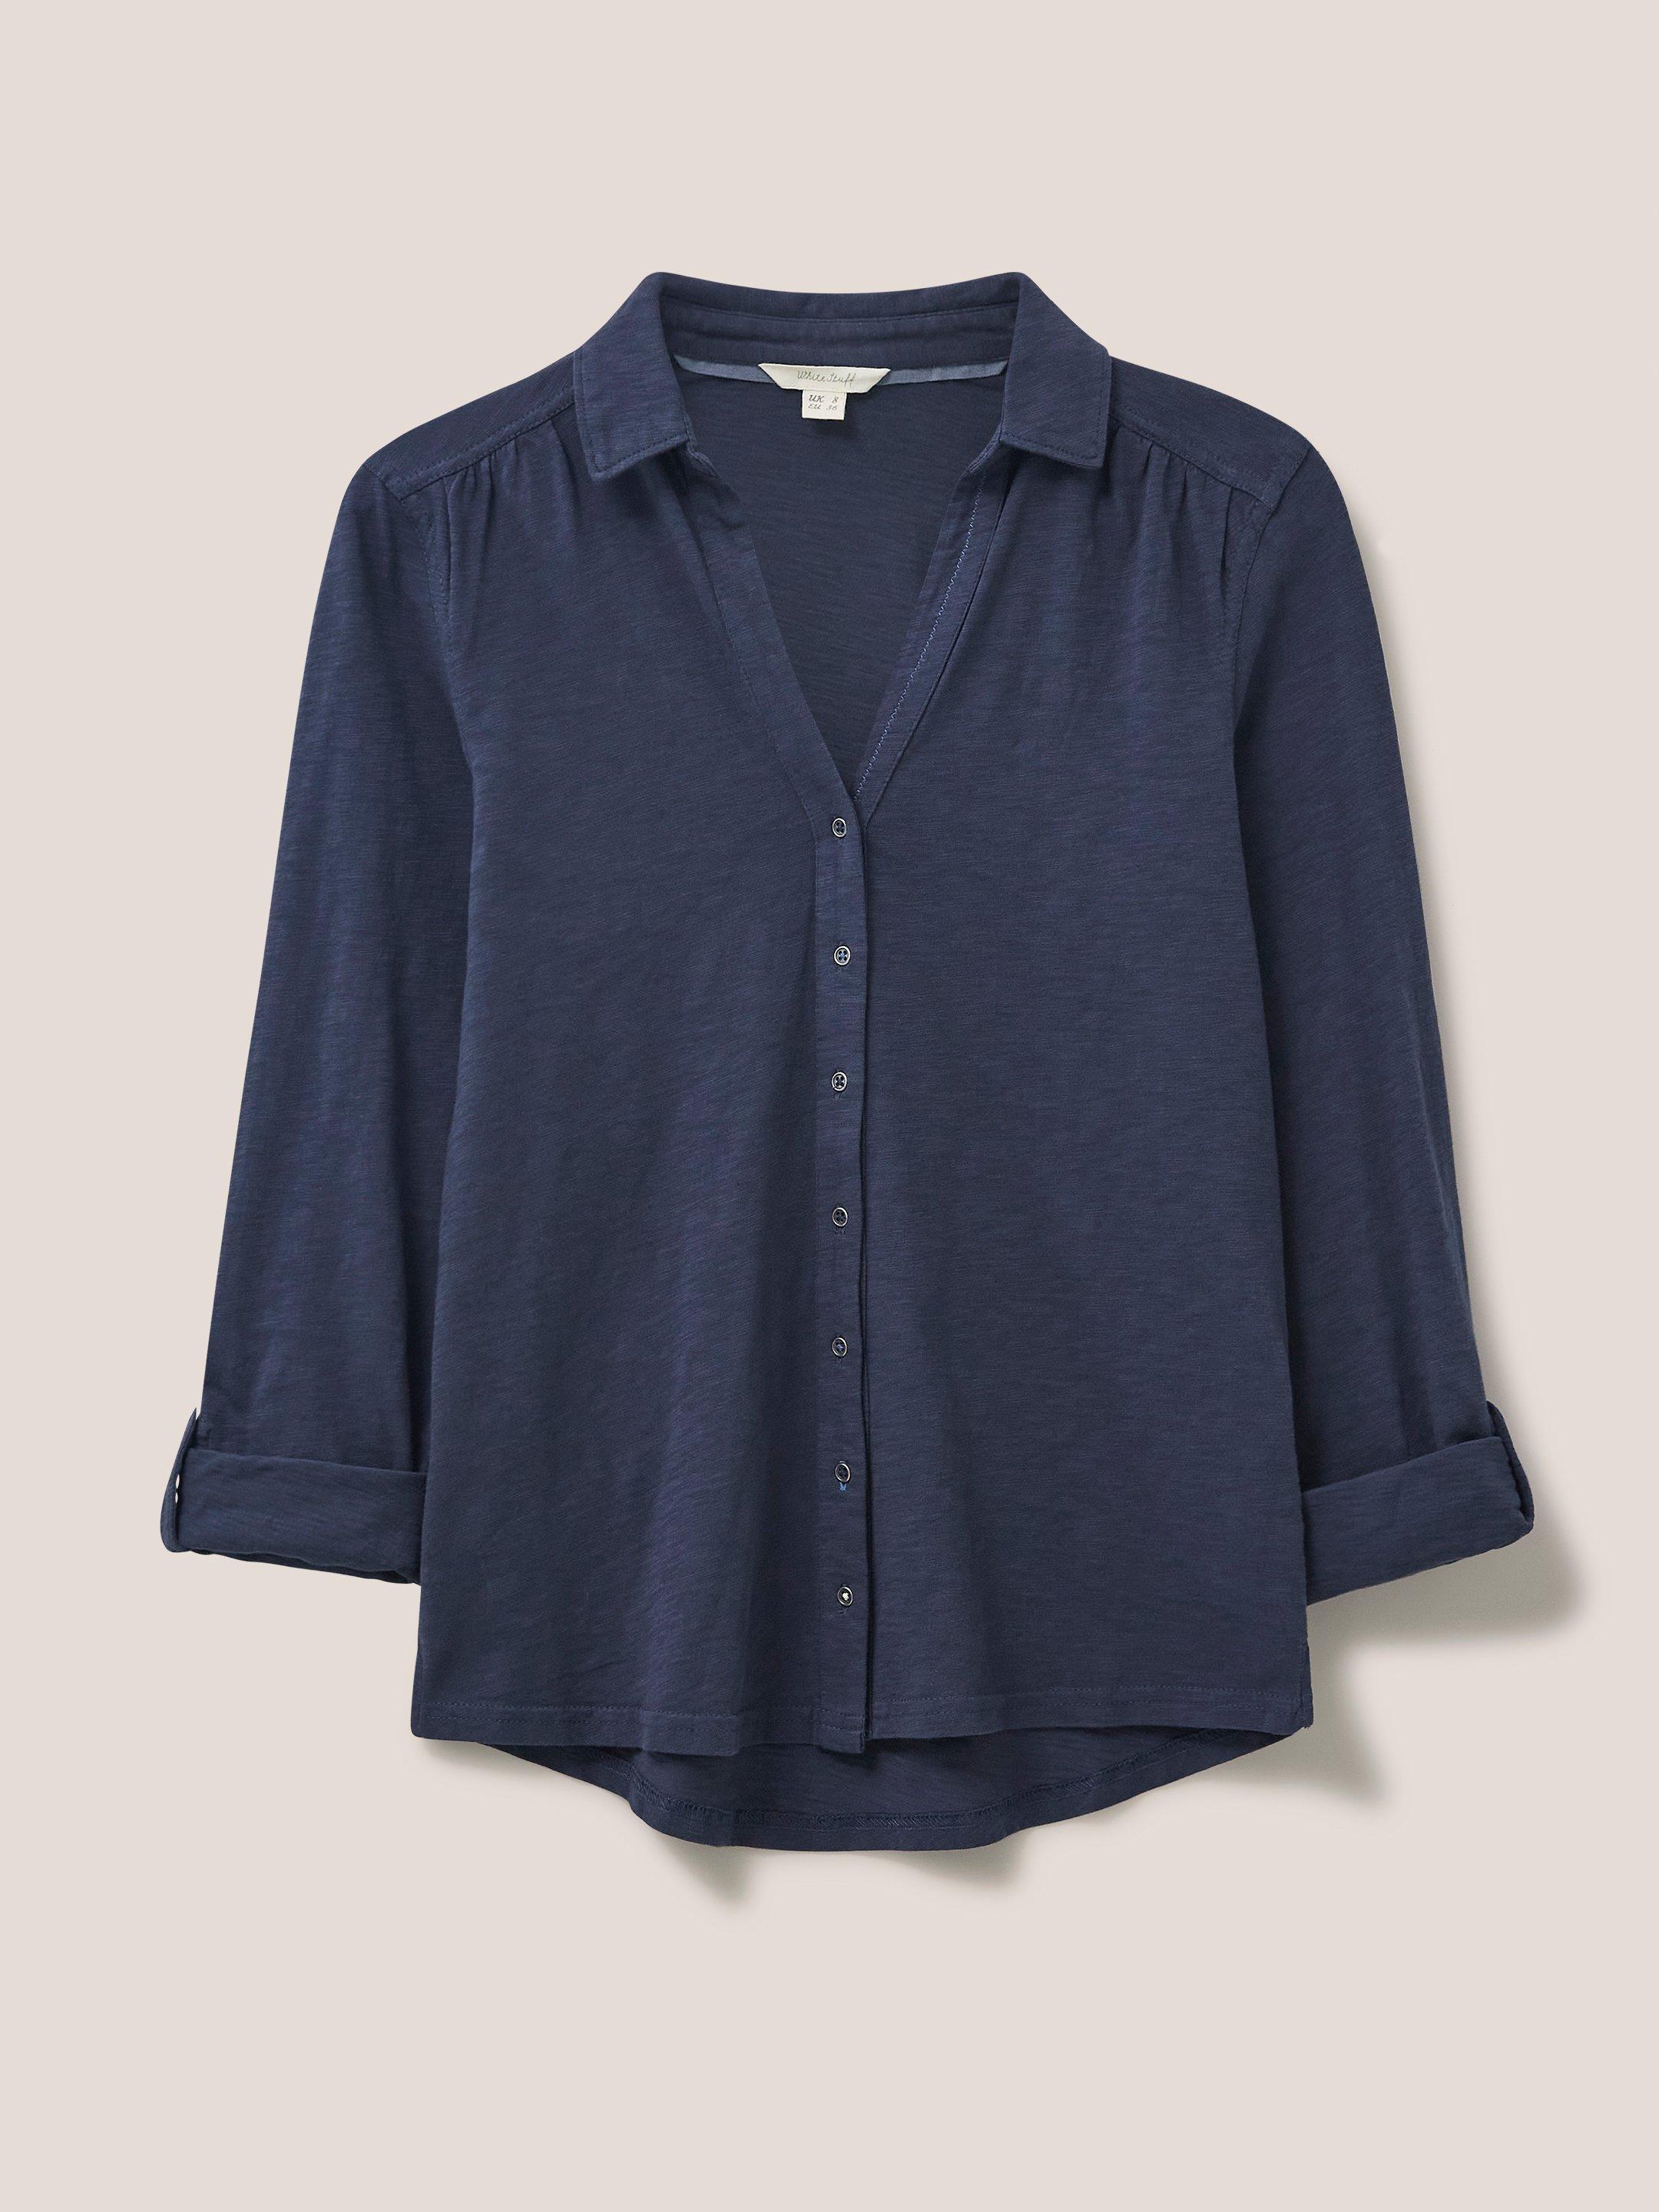 Annie Jersey Shirt in FR NAVY - FLAT FRONT